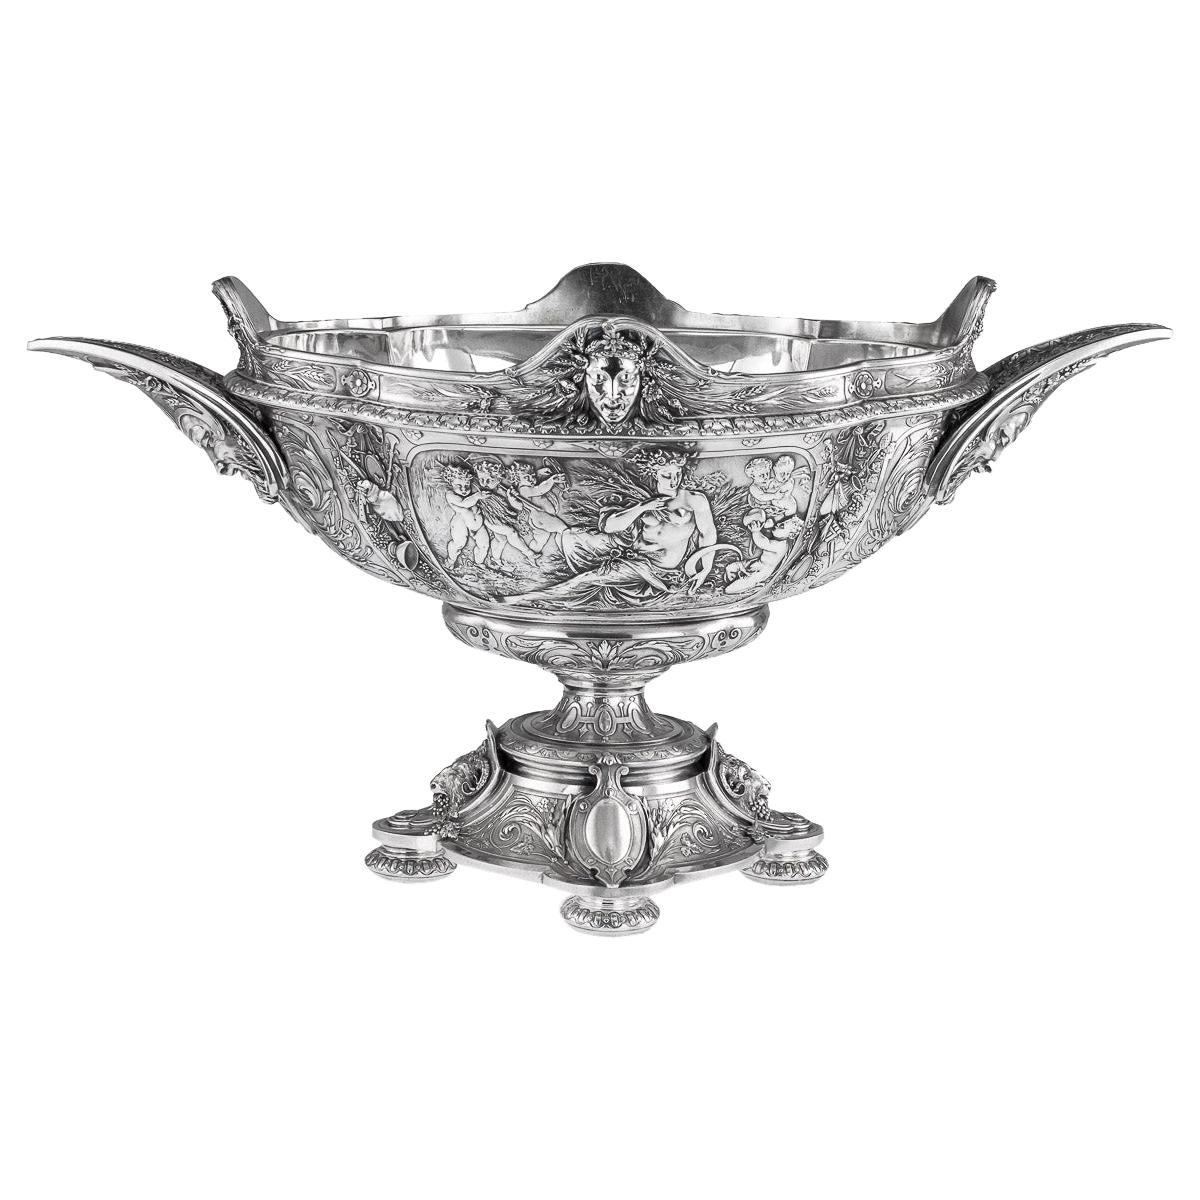 19th Century Victorian Silver Plate Centerpiece Bowl, Elkington, circa 1885